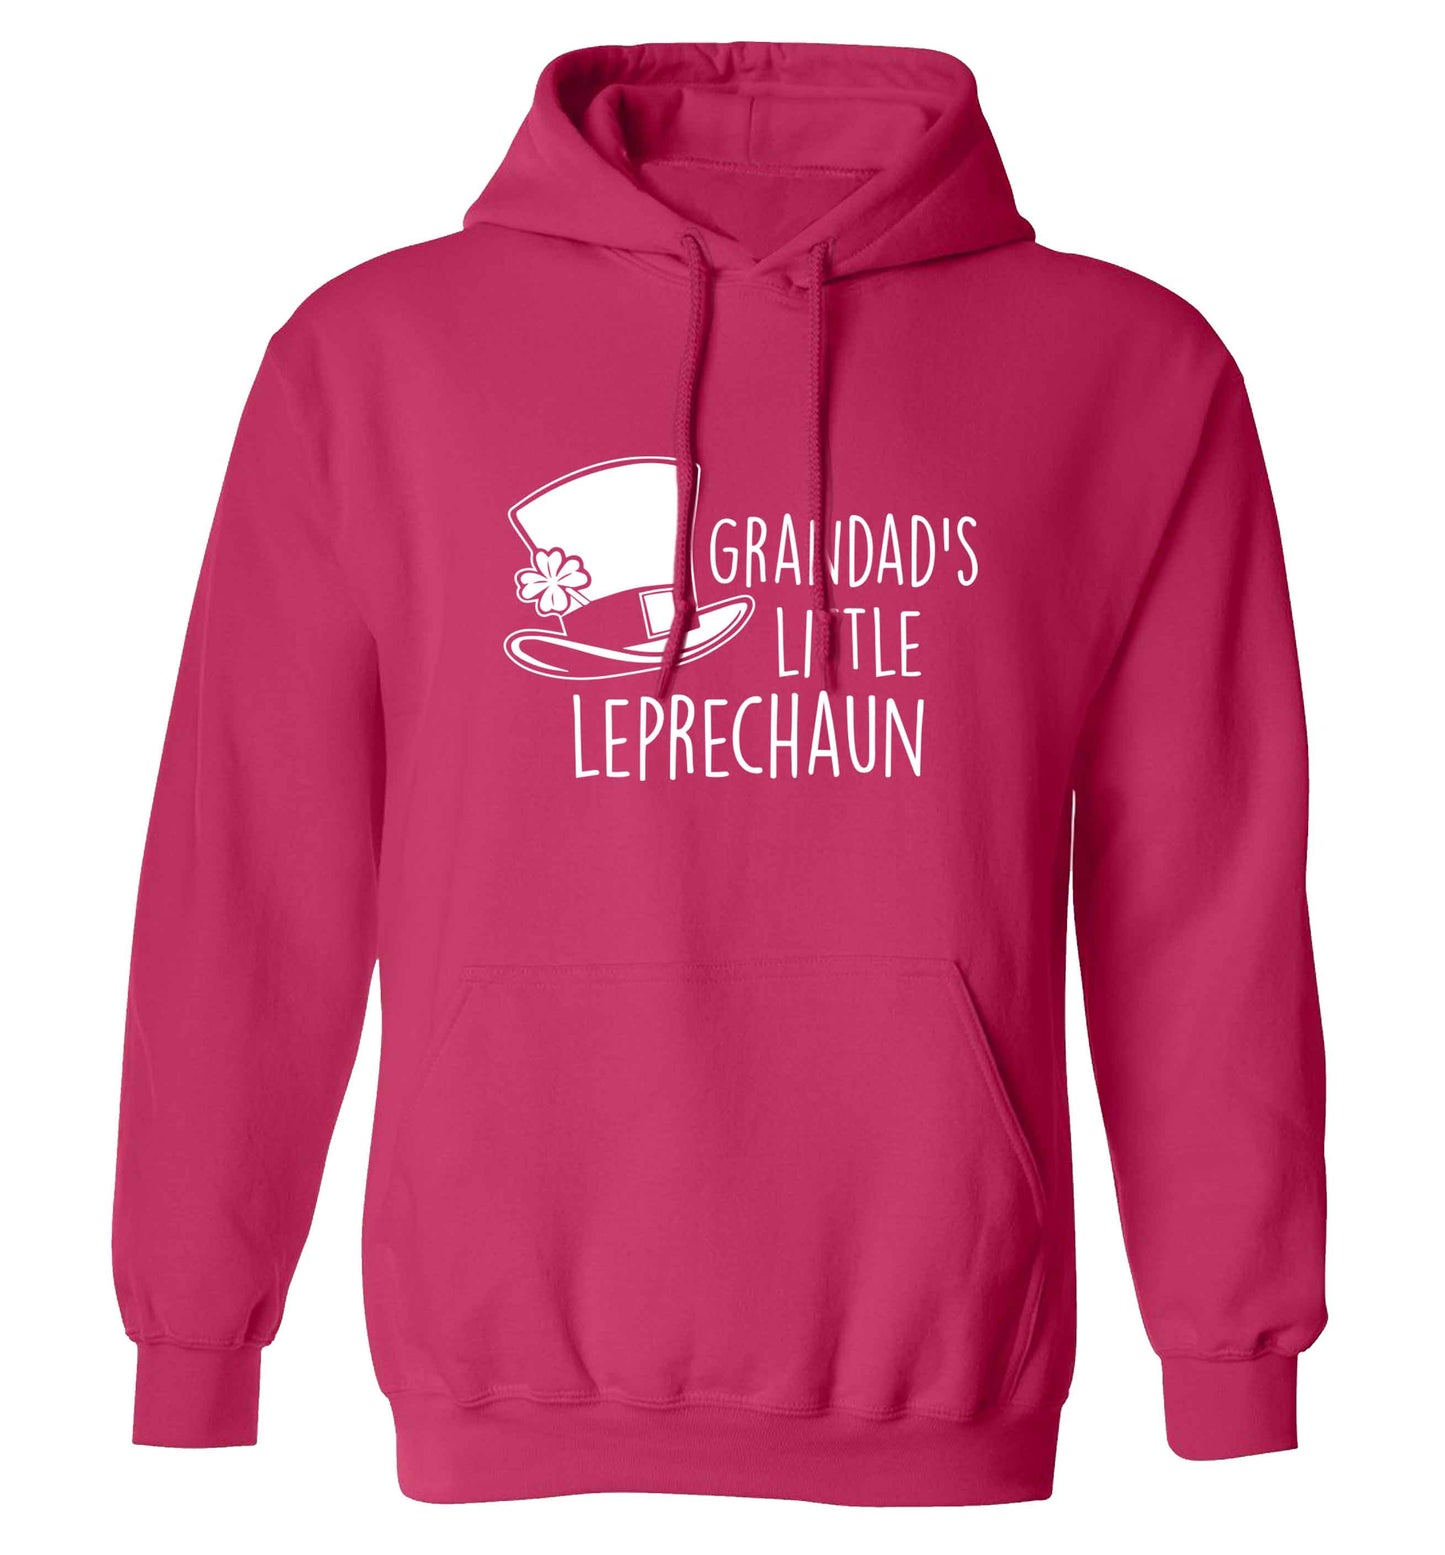 Grandad's little leprechaun adults unisex pink hoodie 2XL